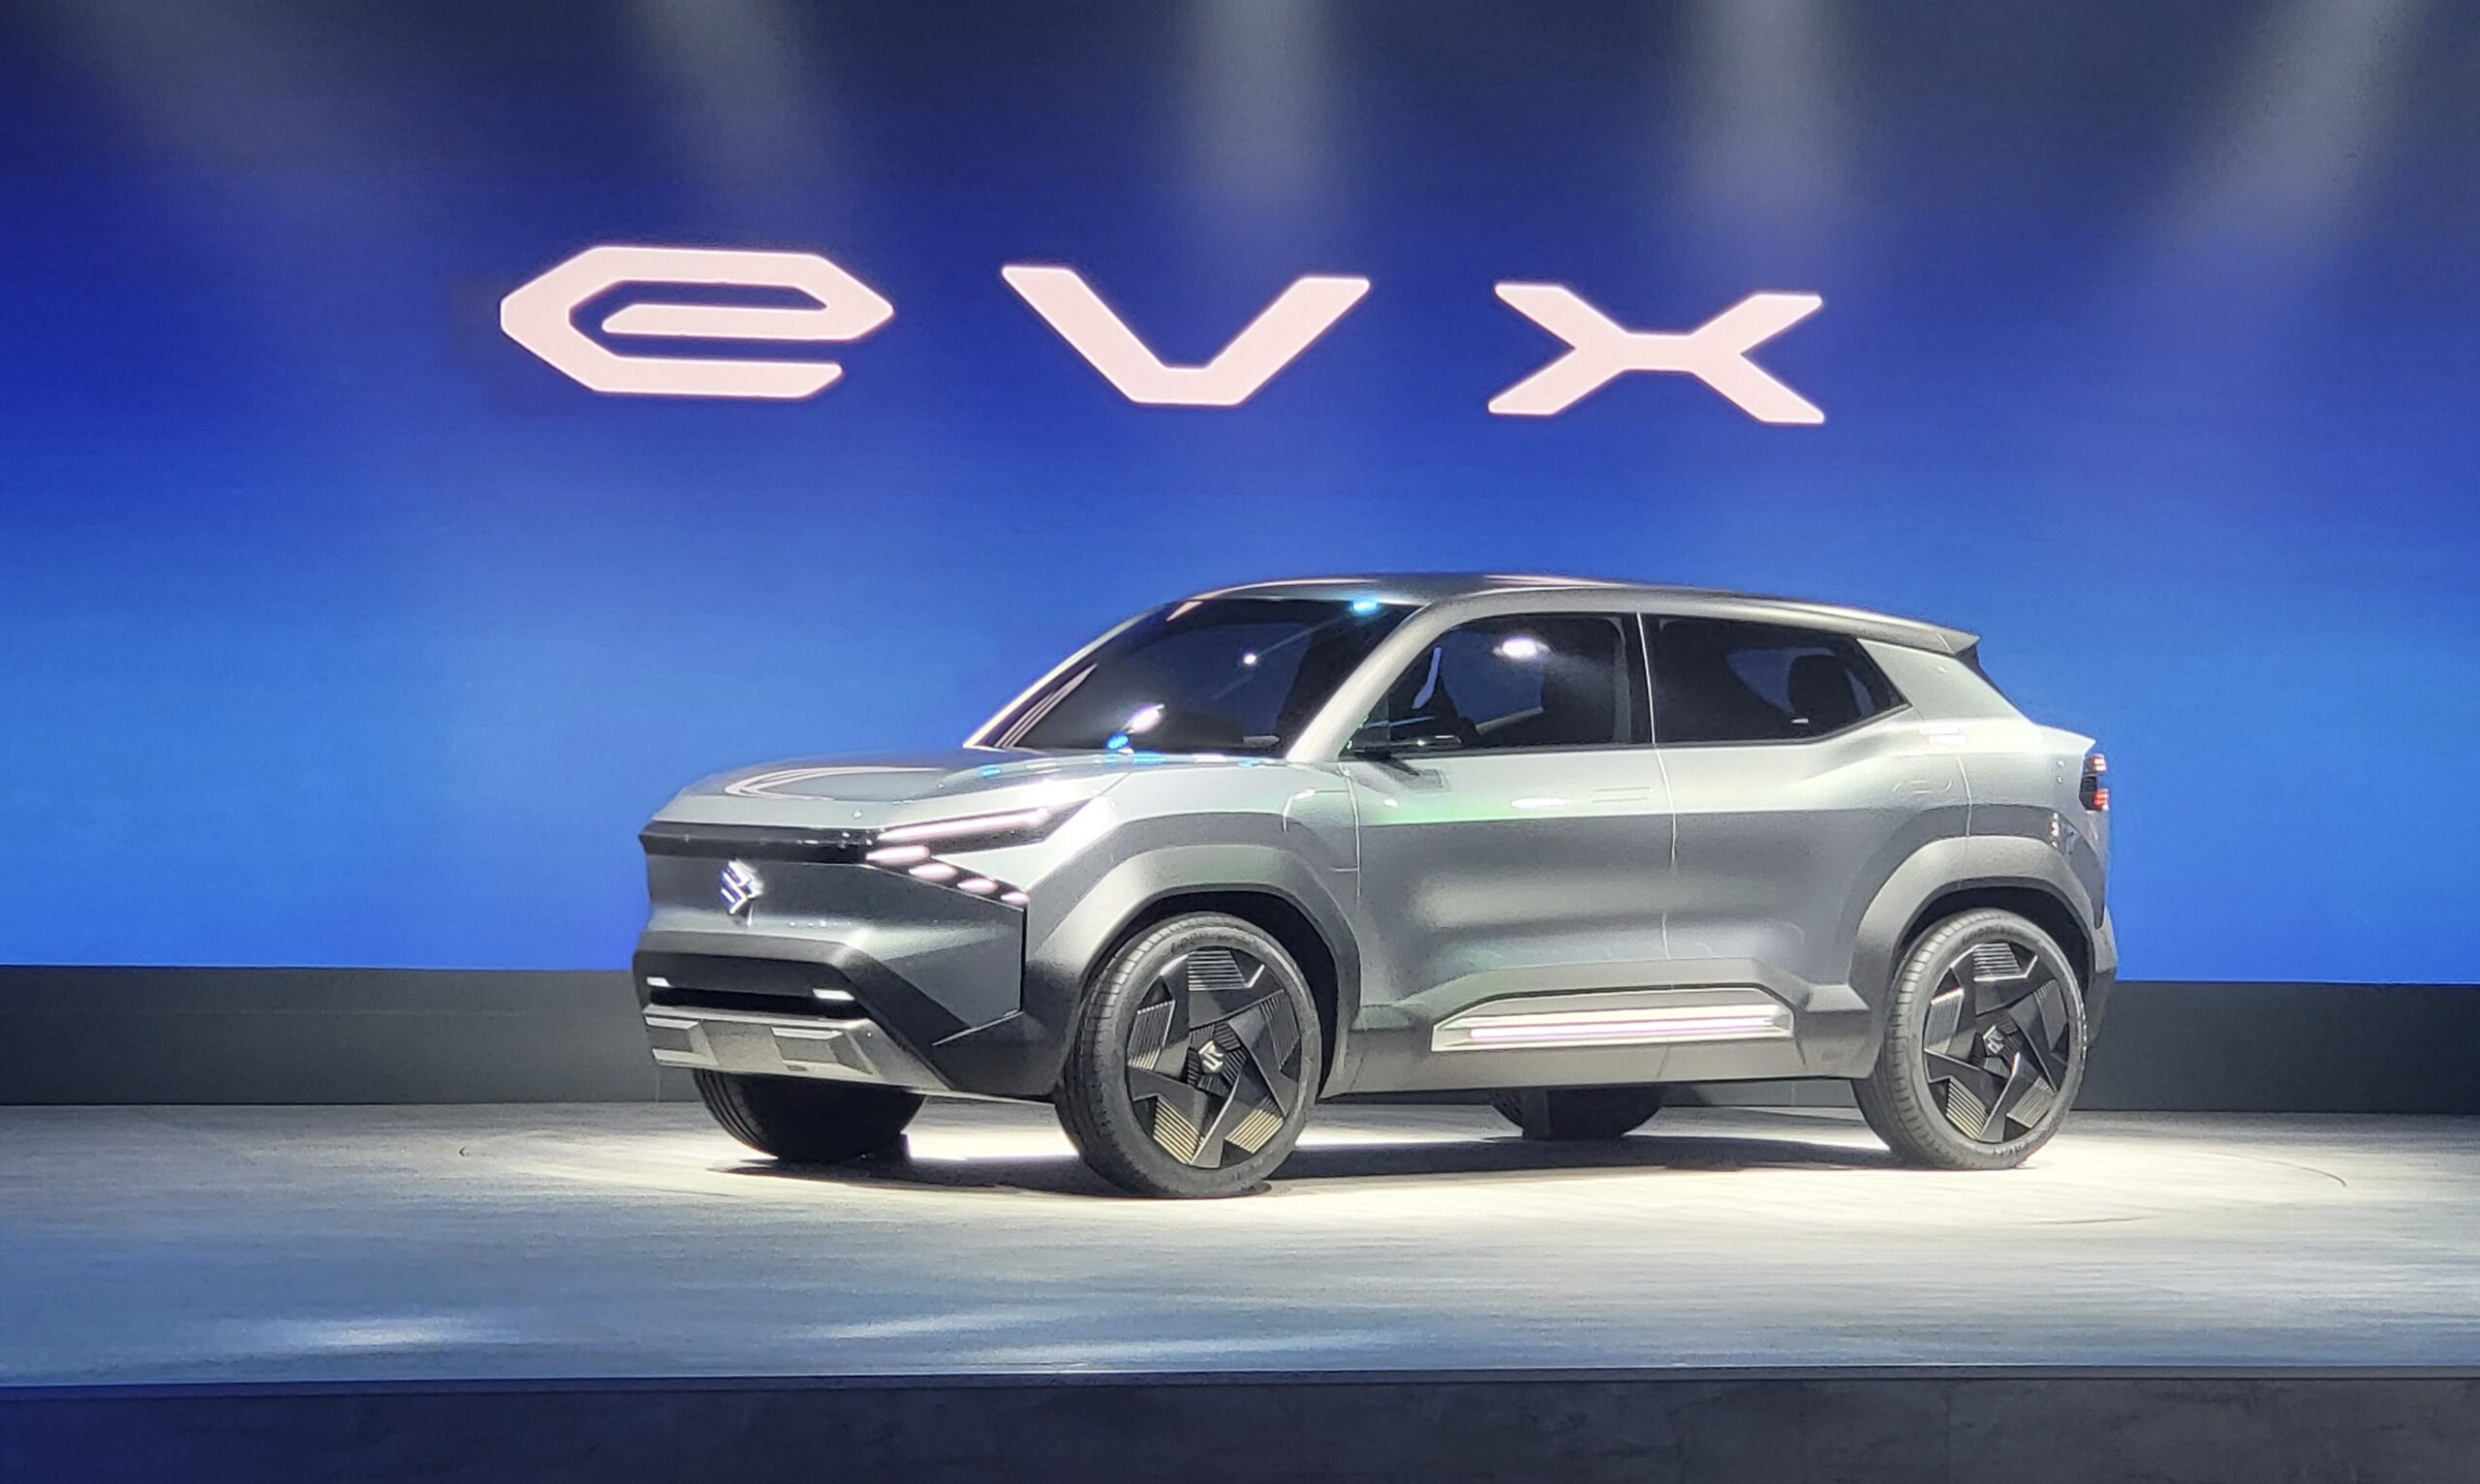 Maruti Suzuki Showcases Its First Global EV Concept At The 2023 Auto Expo